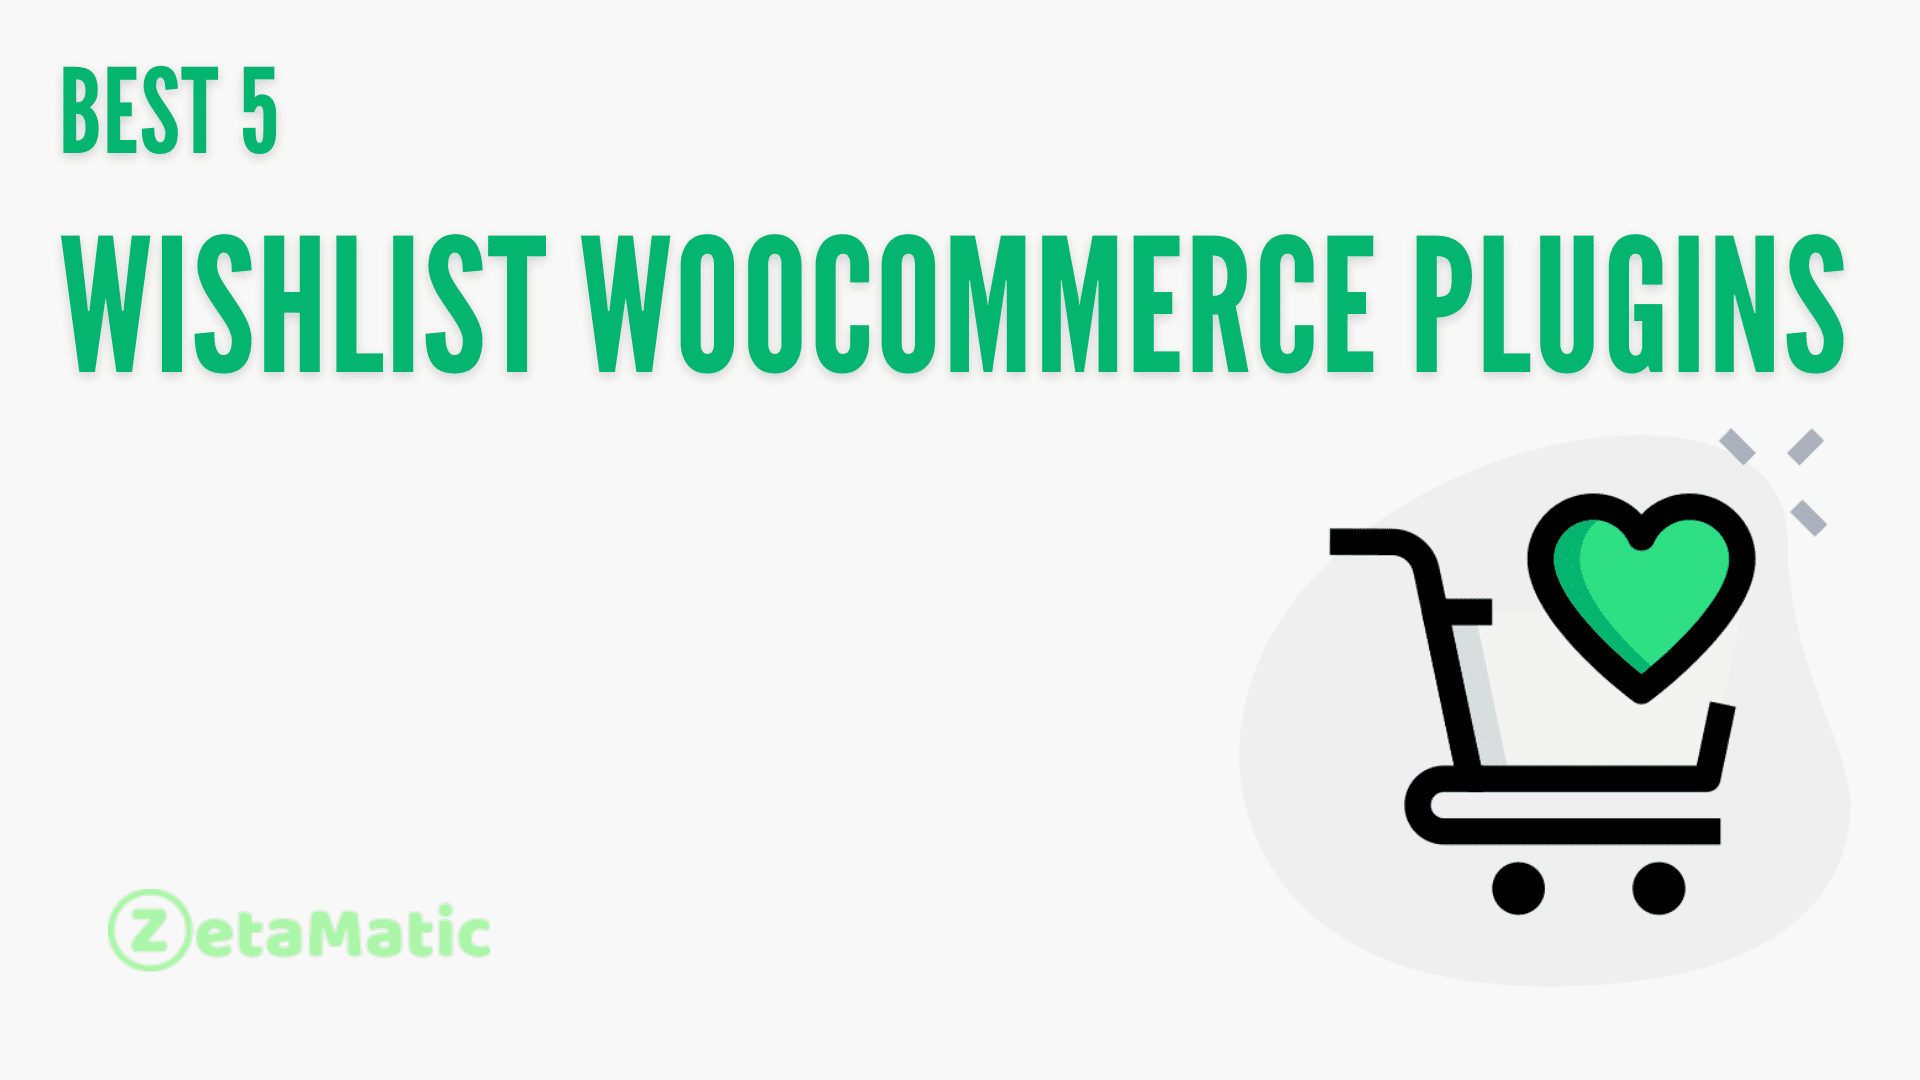 Best 5 Wishlist WooCommerce Plugins